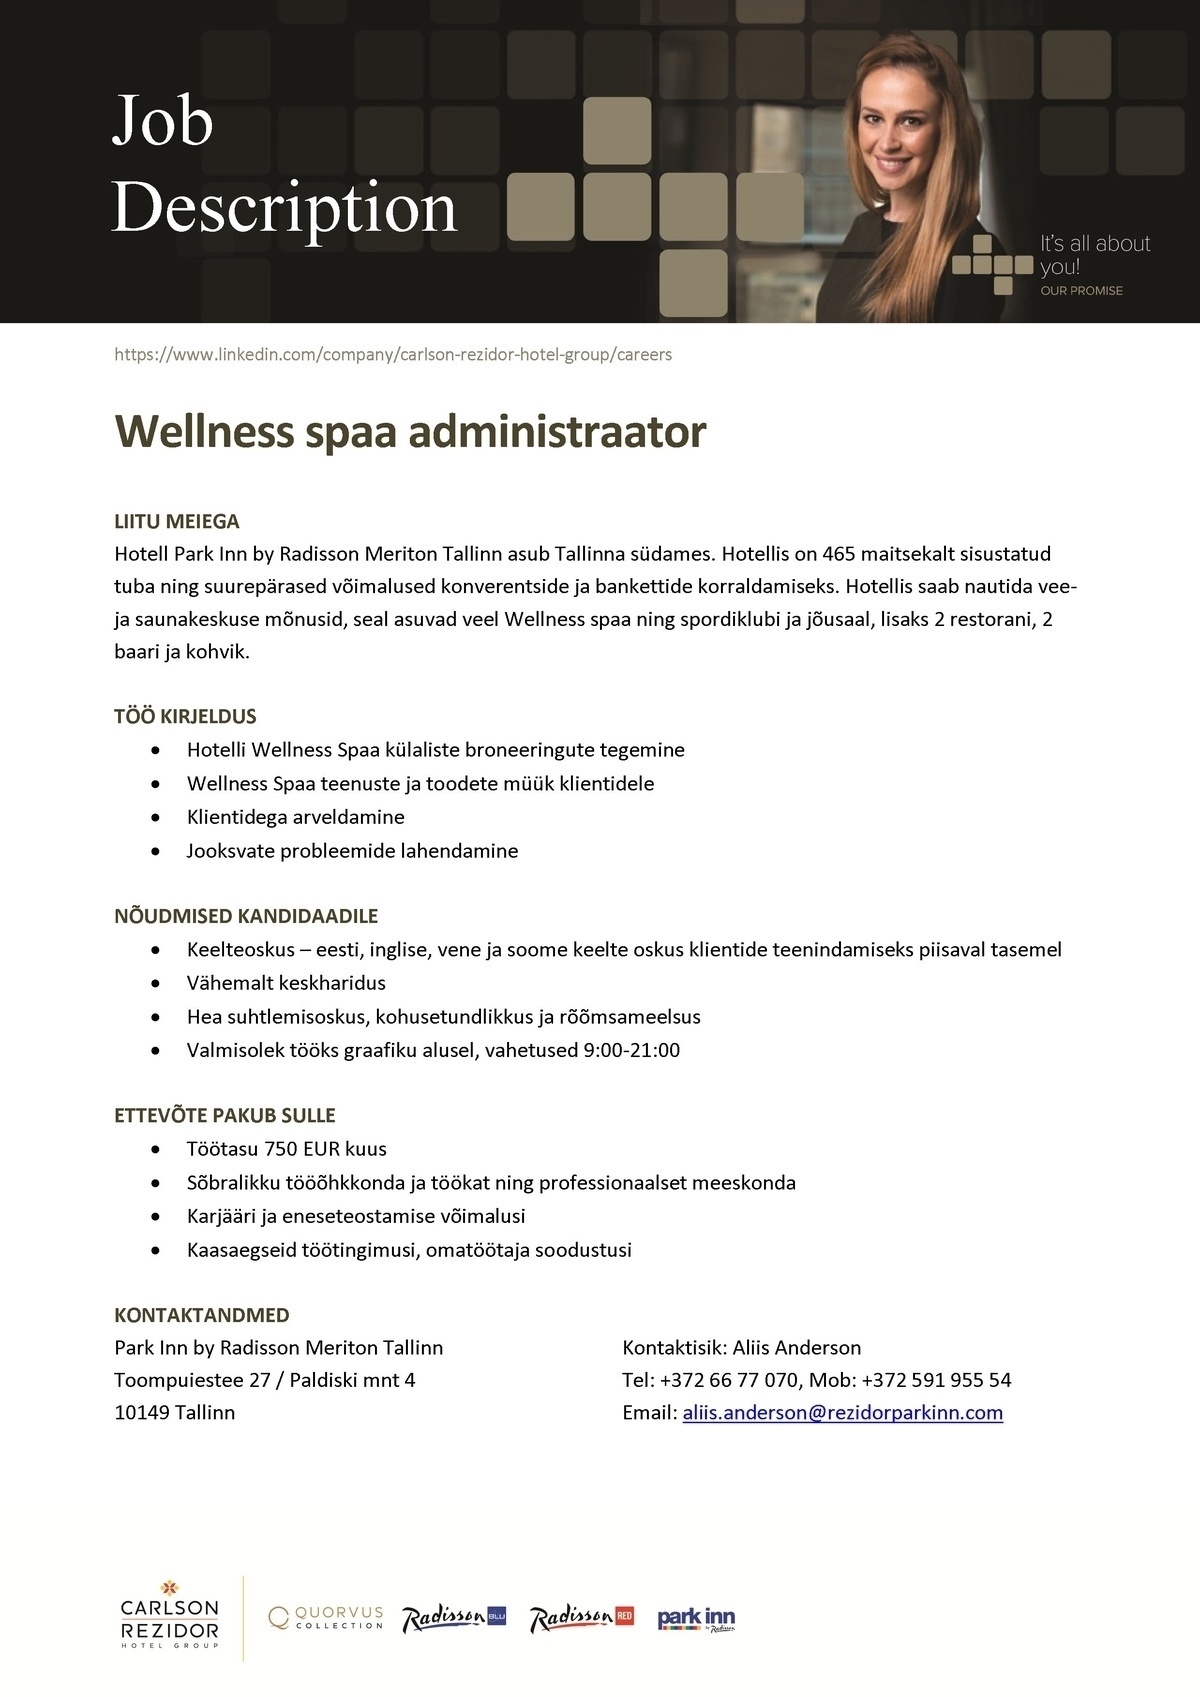 Meriton Hotels AS Wellness spaa administraator